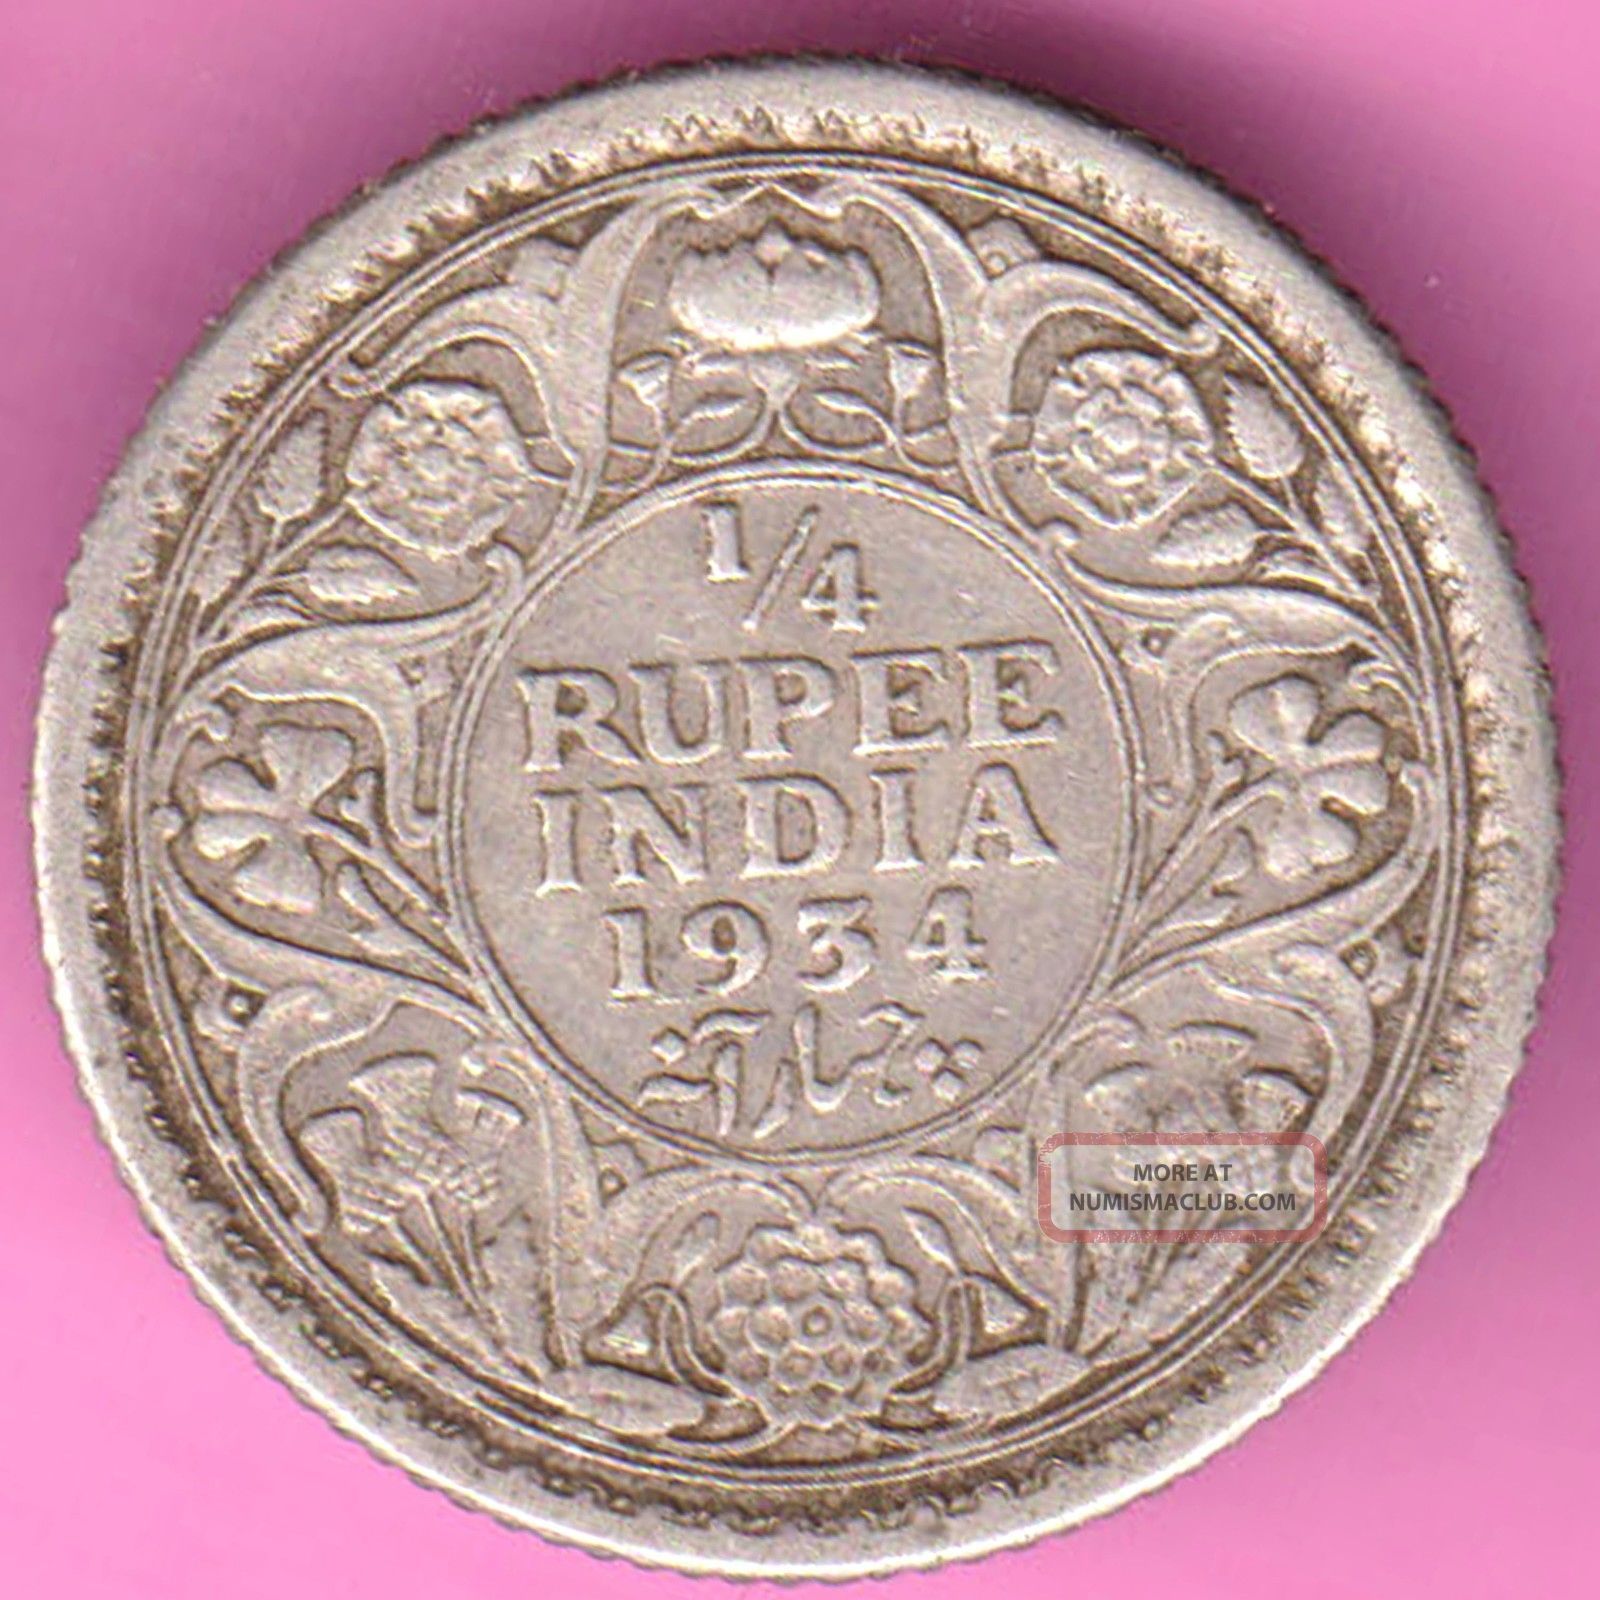 British India - 1934 - 1/4 Rupee - King George V - Rarest Silver Coin - 49 British photo